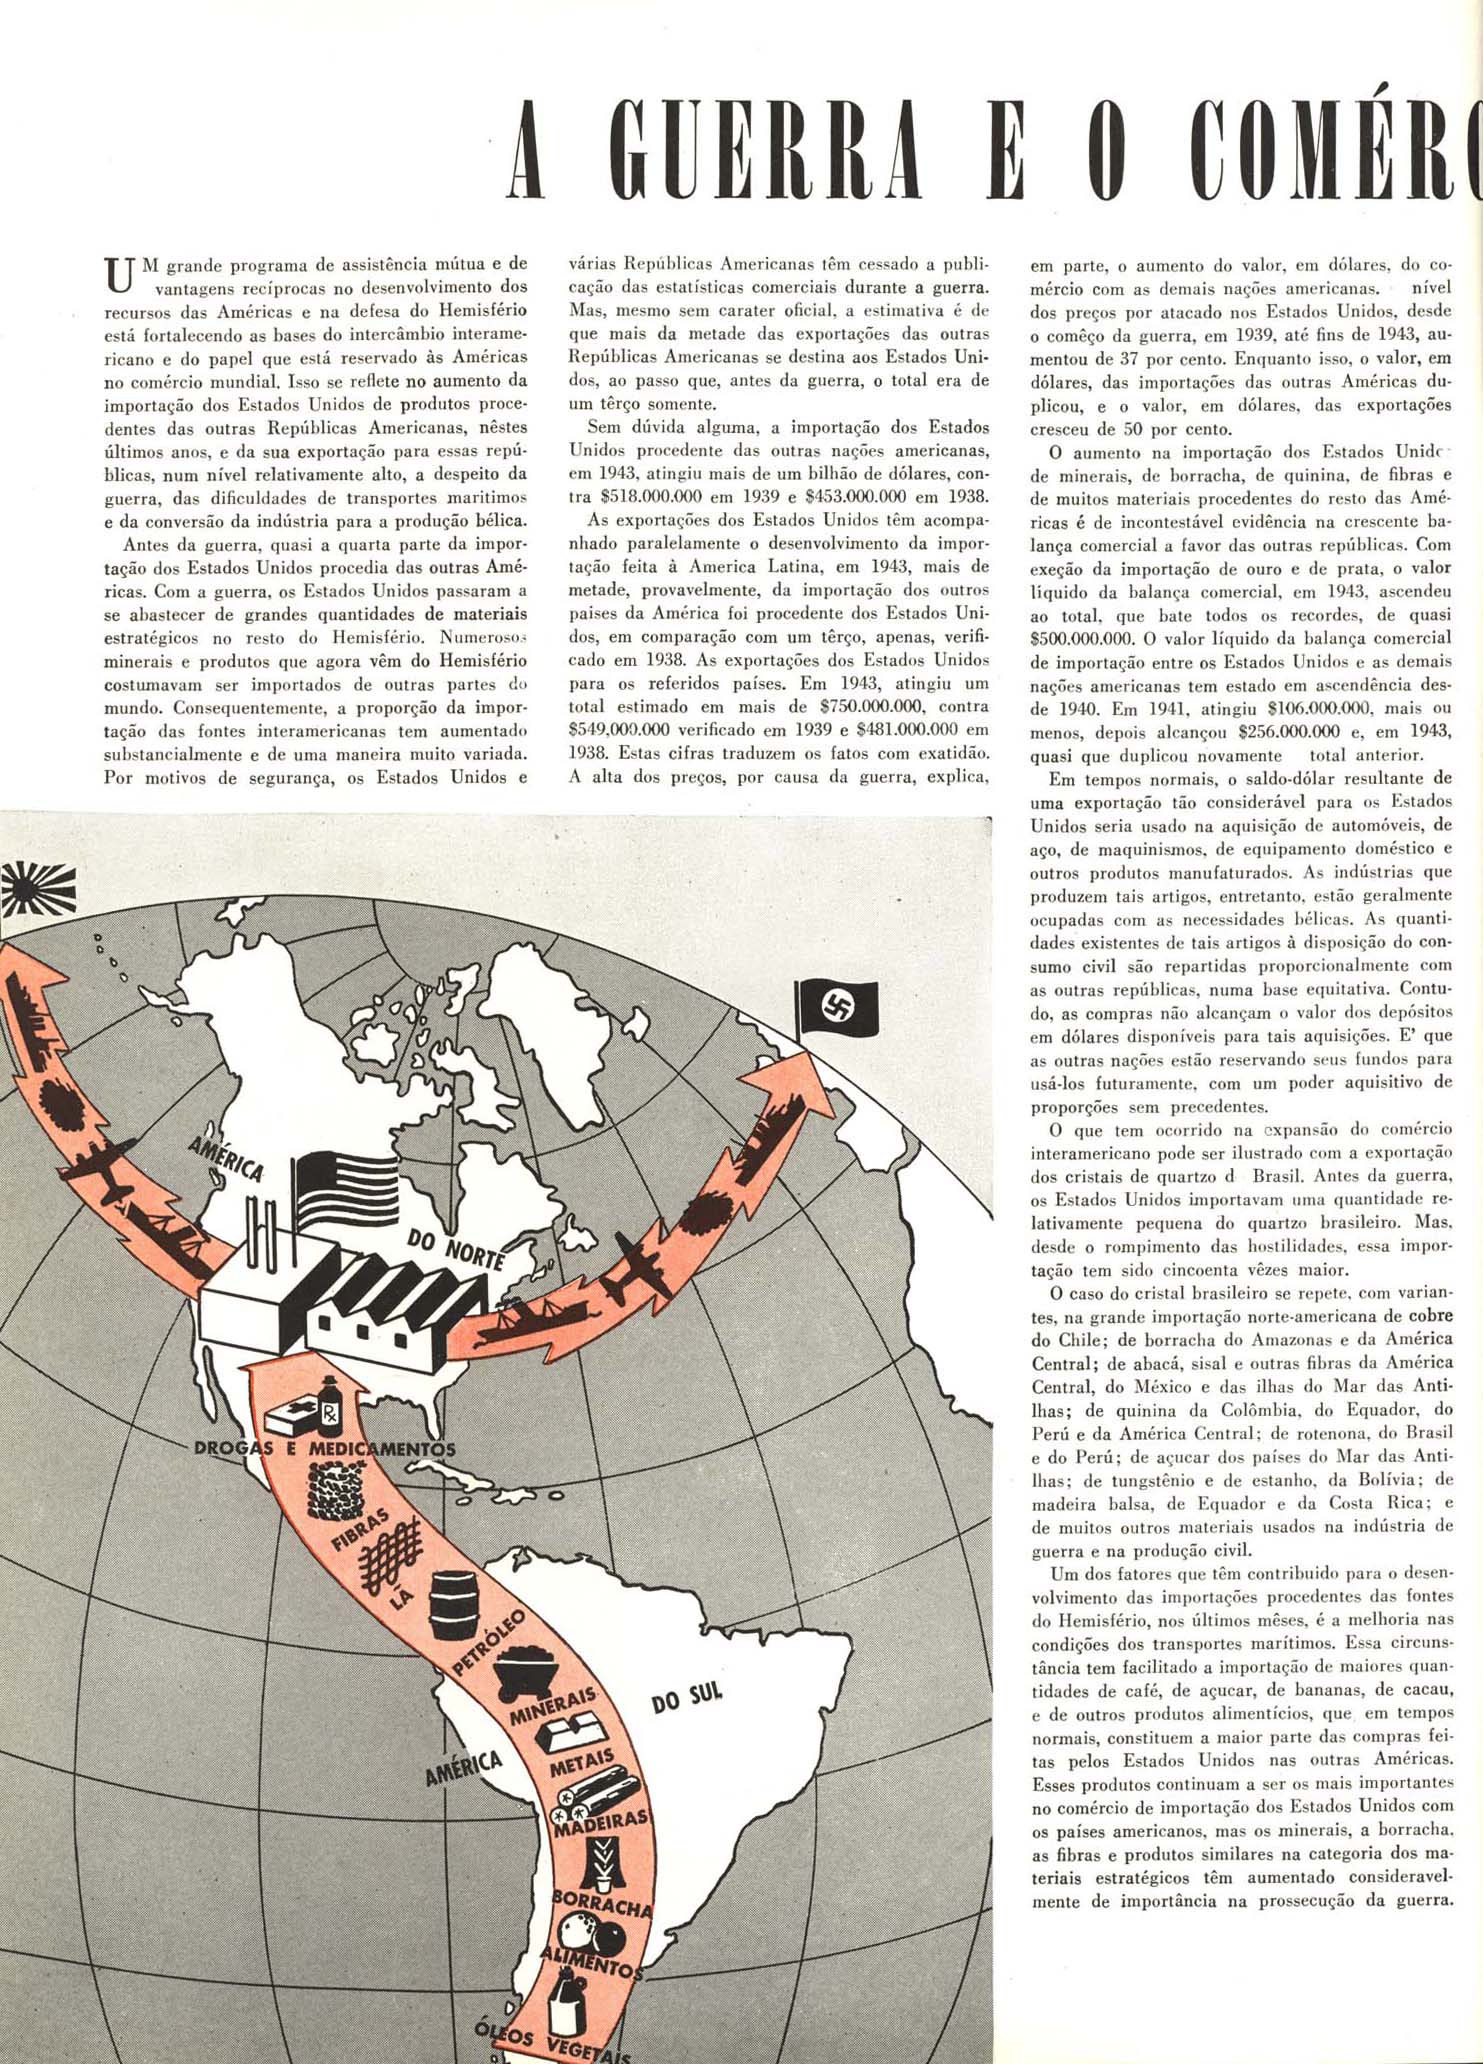 A GUERRA e o comércio entre as Américas. Em Guarda, Washington, ano 3, n. 7, p. 6-7, [194-?].